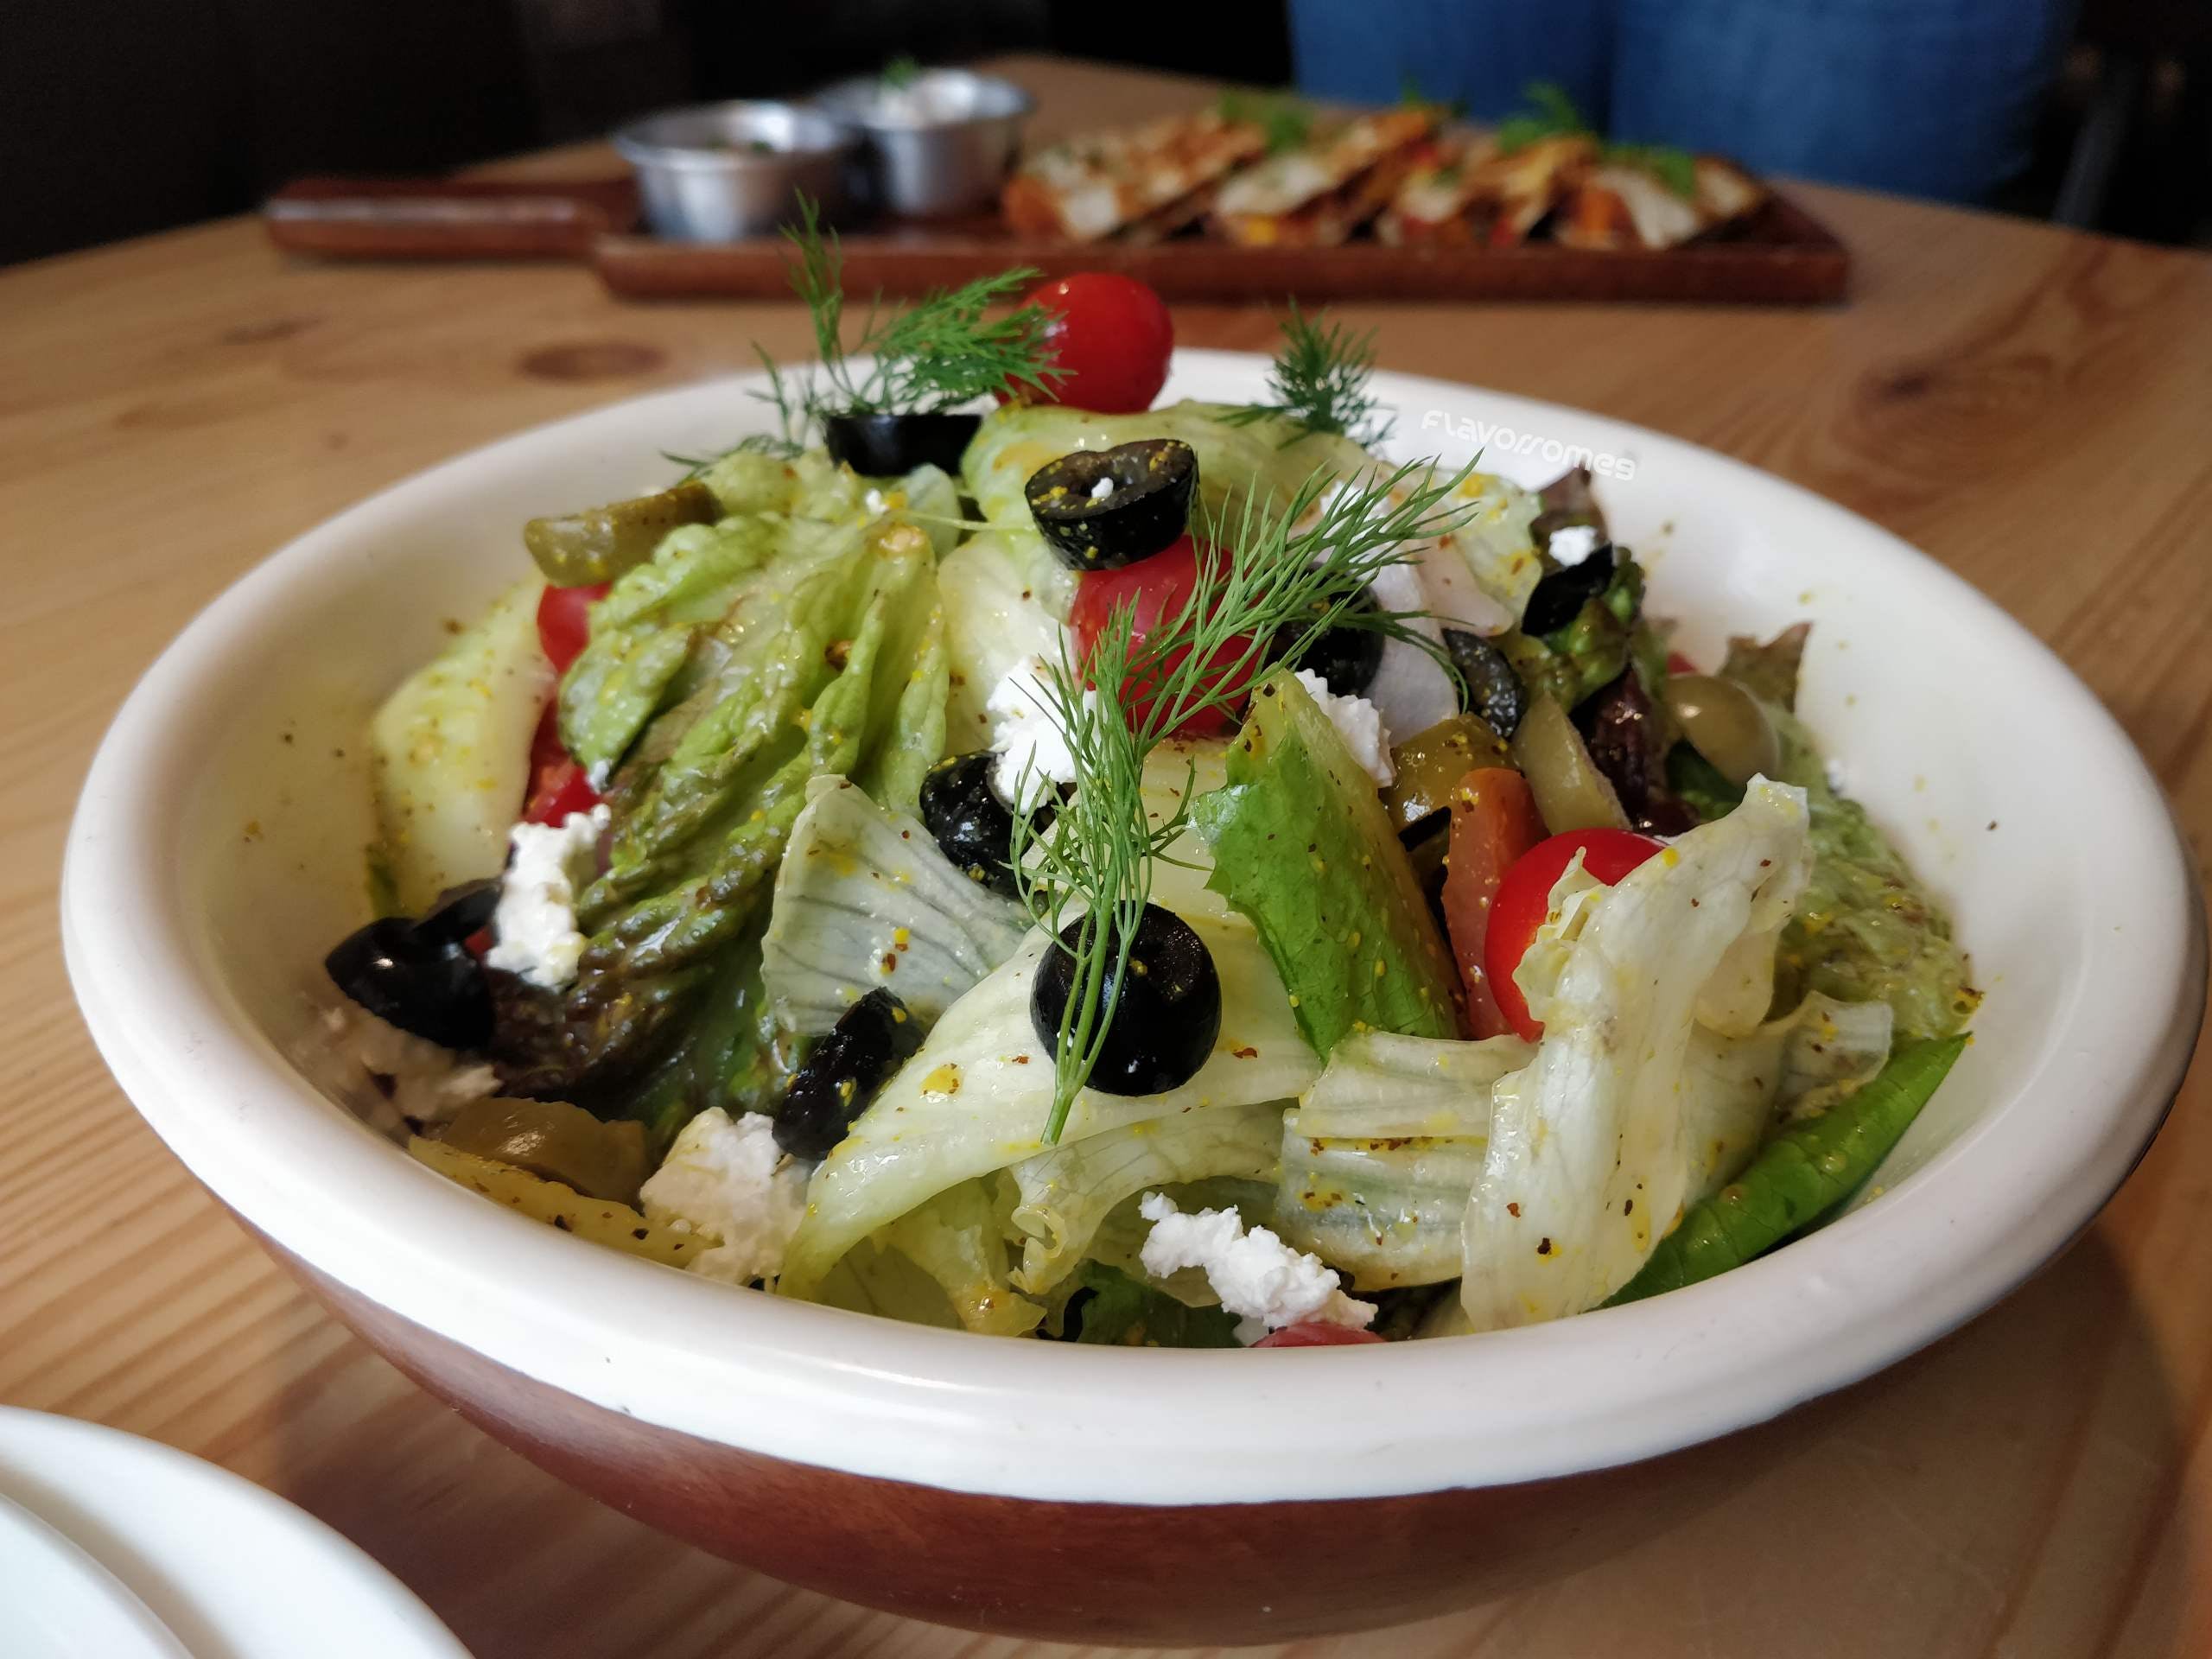 Dish,Food,Cuisine,Greek salad,Salad,Ingredient,Garden salad,Vegetable,Produce,Caesar salad